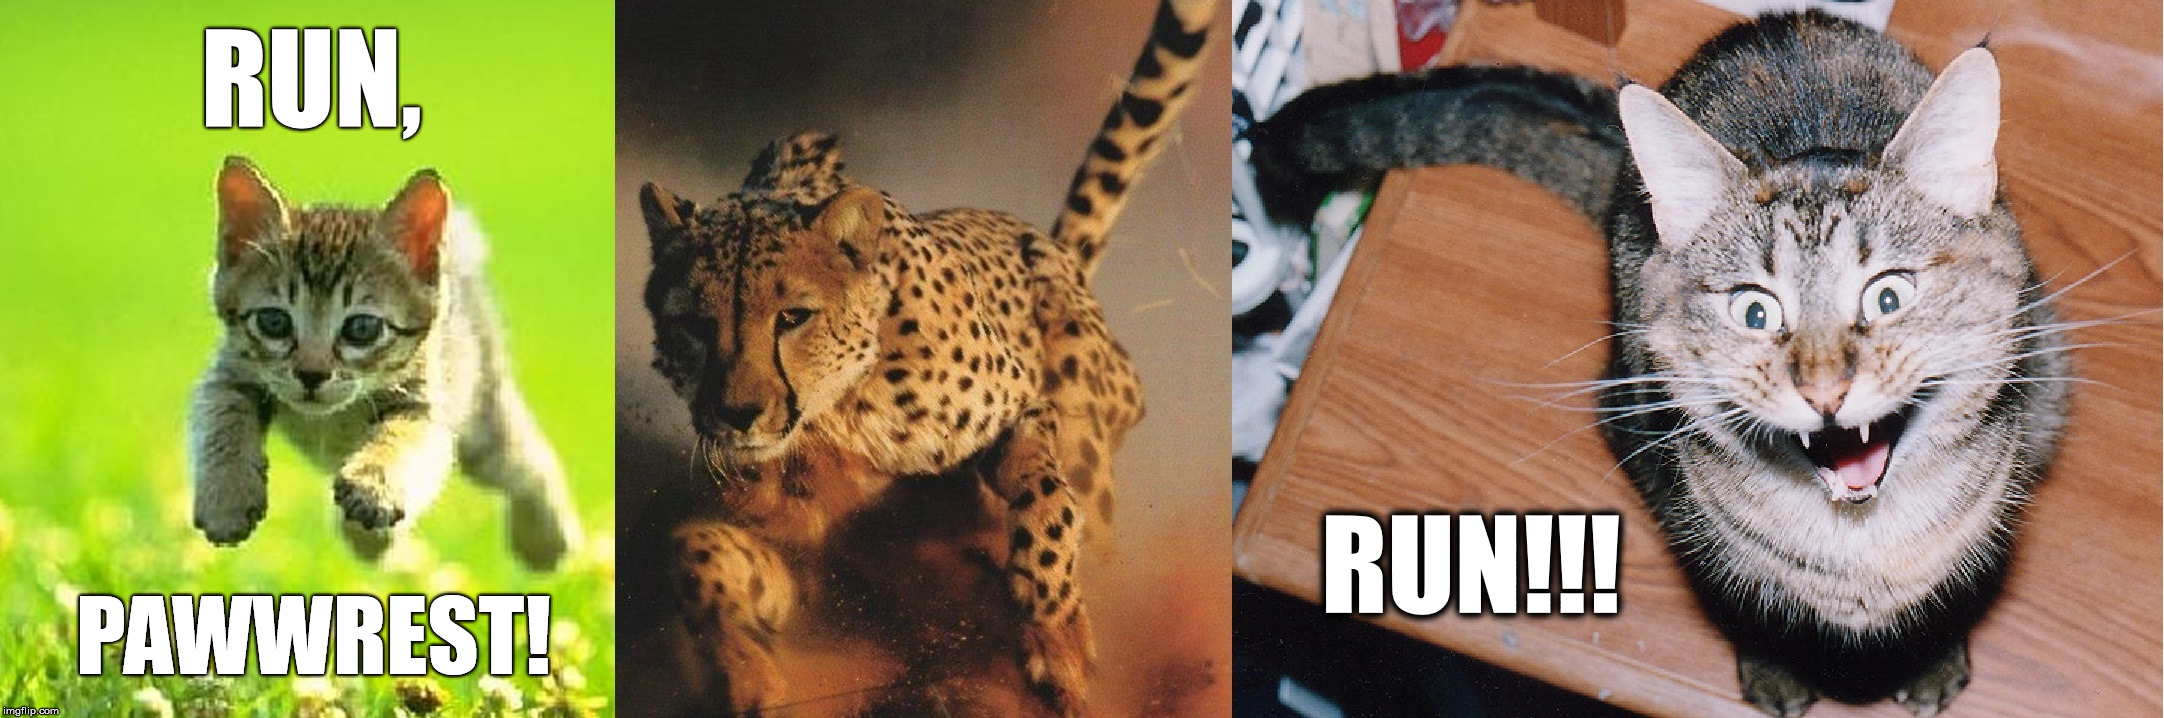 run pawwrest run!!! | RUN, RUN!!! PAWWREST! | image tagged in forrest gump running,forrest gump,kittens,cheetah,scaredy cat img | made w/ Imgflip meme maker